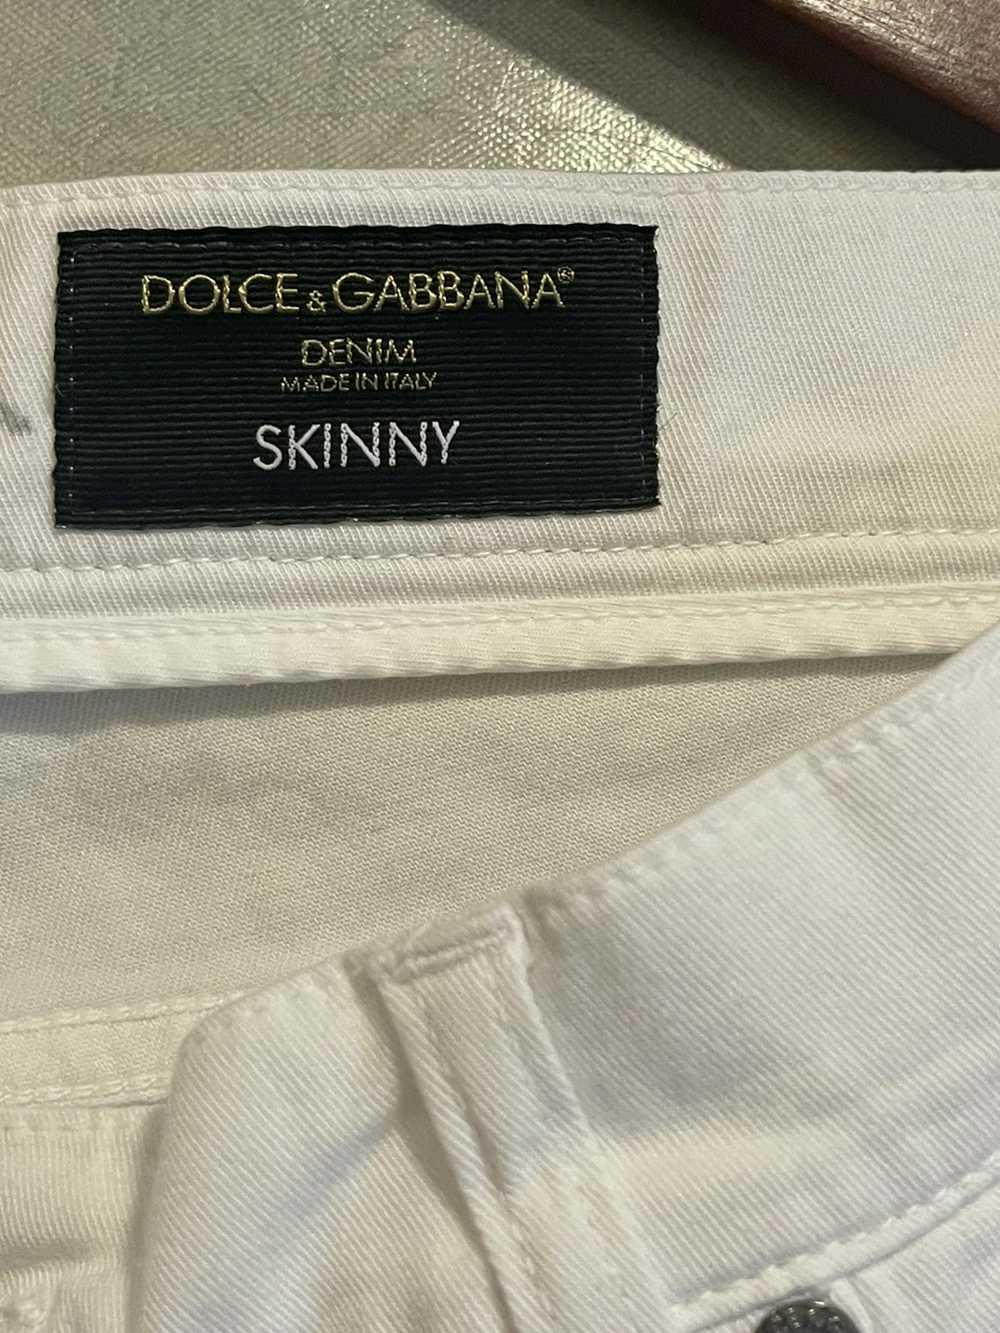 Dolce & Gabbana Dolce & Gabbana denim skinny jeans - image 7